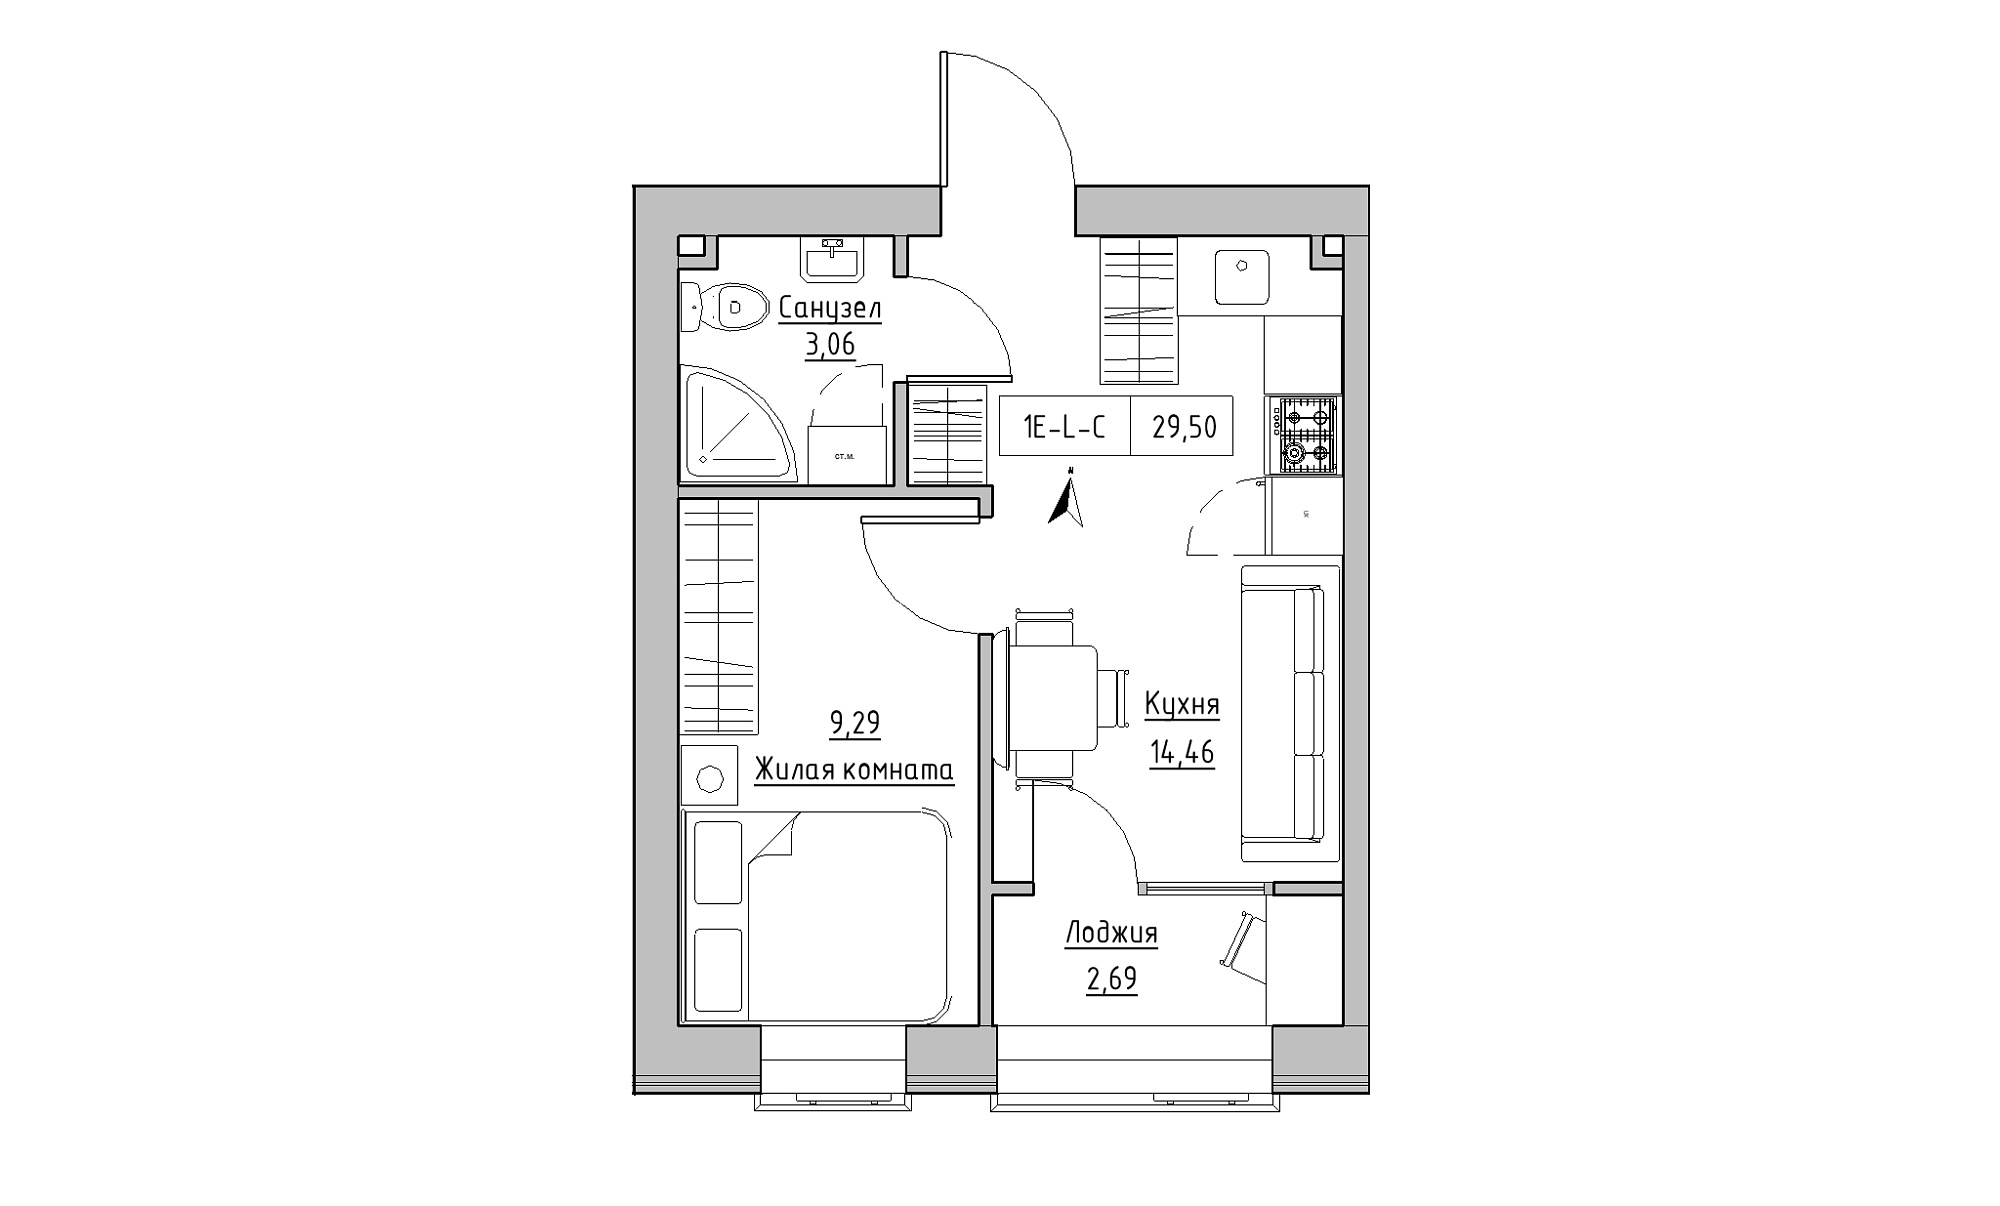 Planning 1-rm flats area 29.5m2, KS-023-02/0011.